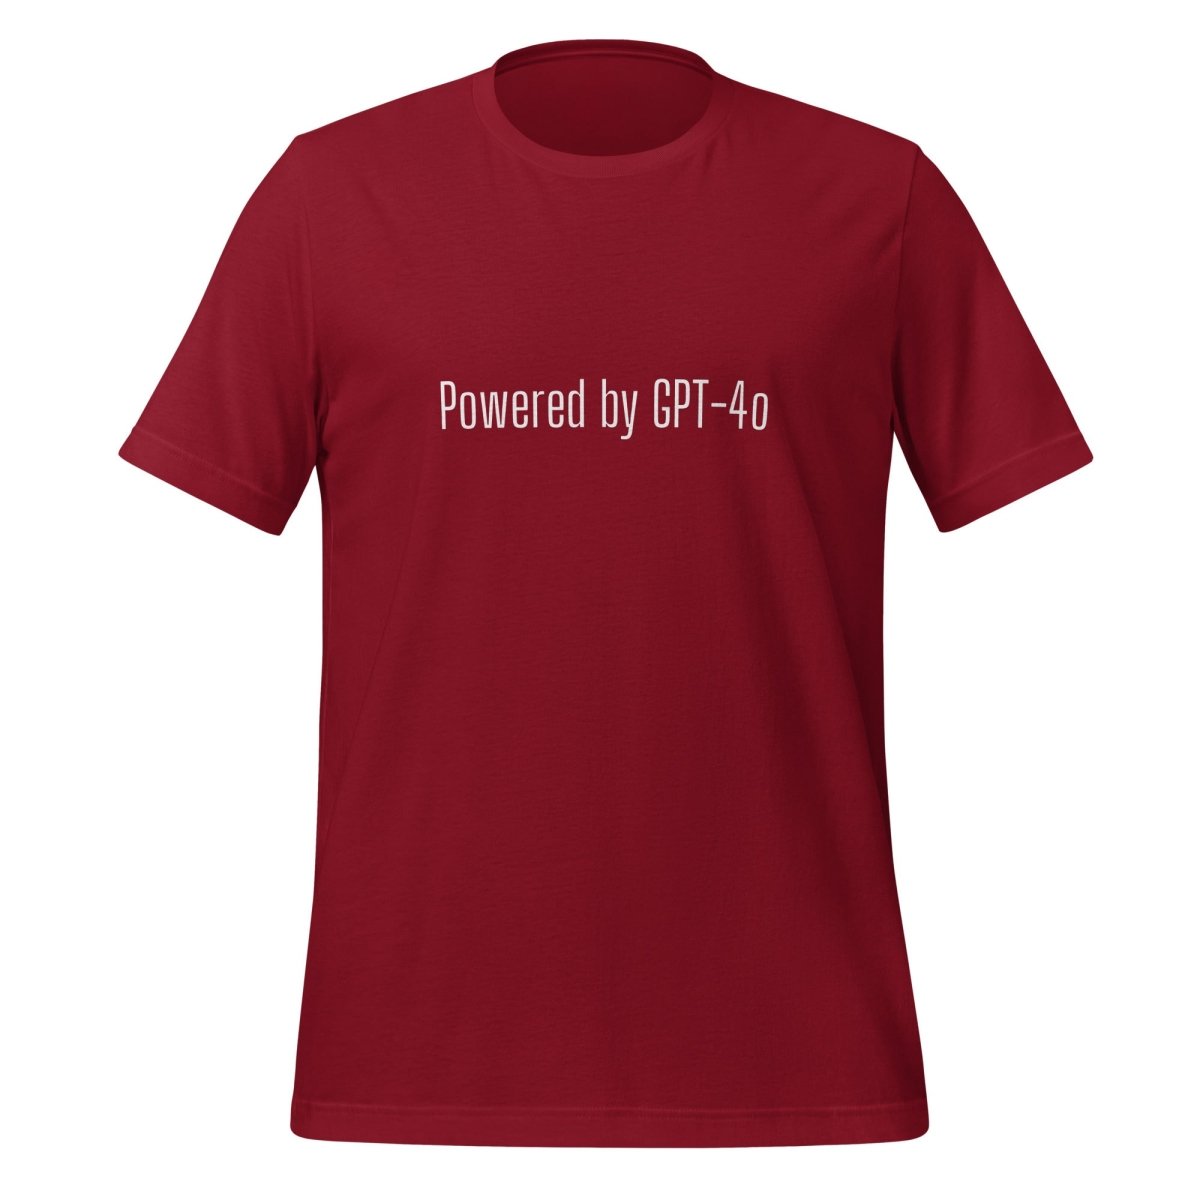 Powered by GPT - 4o T - Shirt 4 (unisex) - Cardinal - AI Store